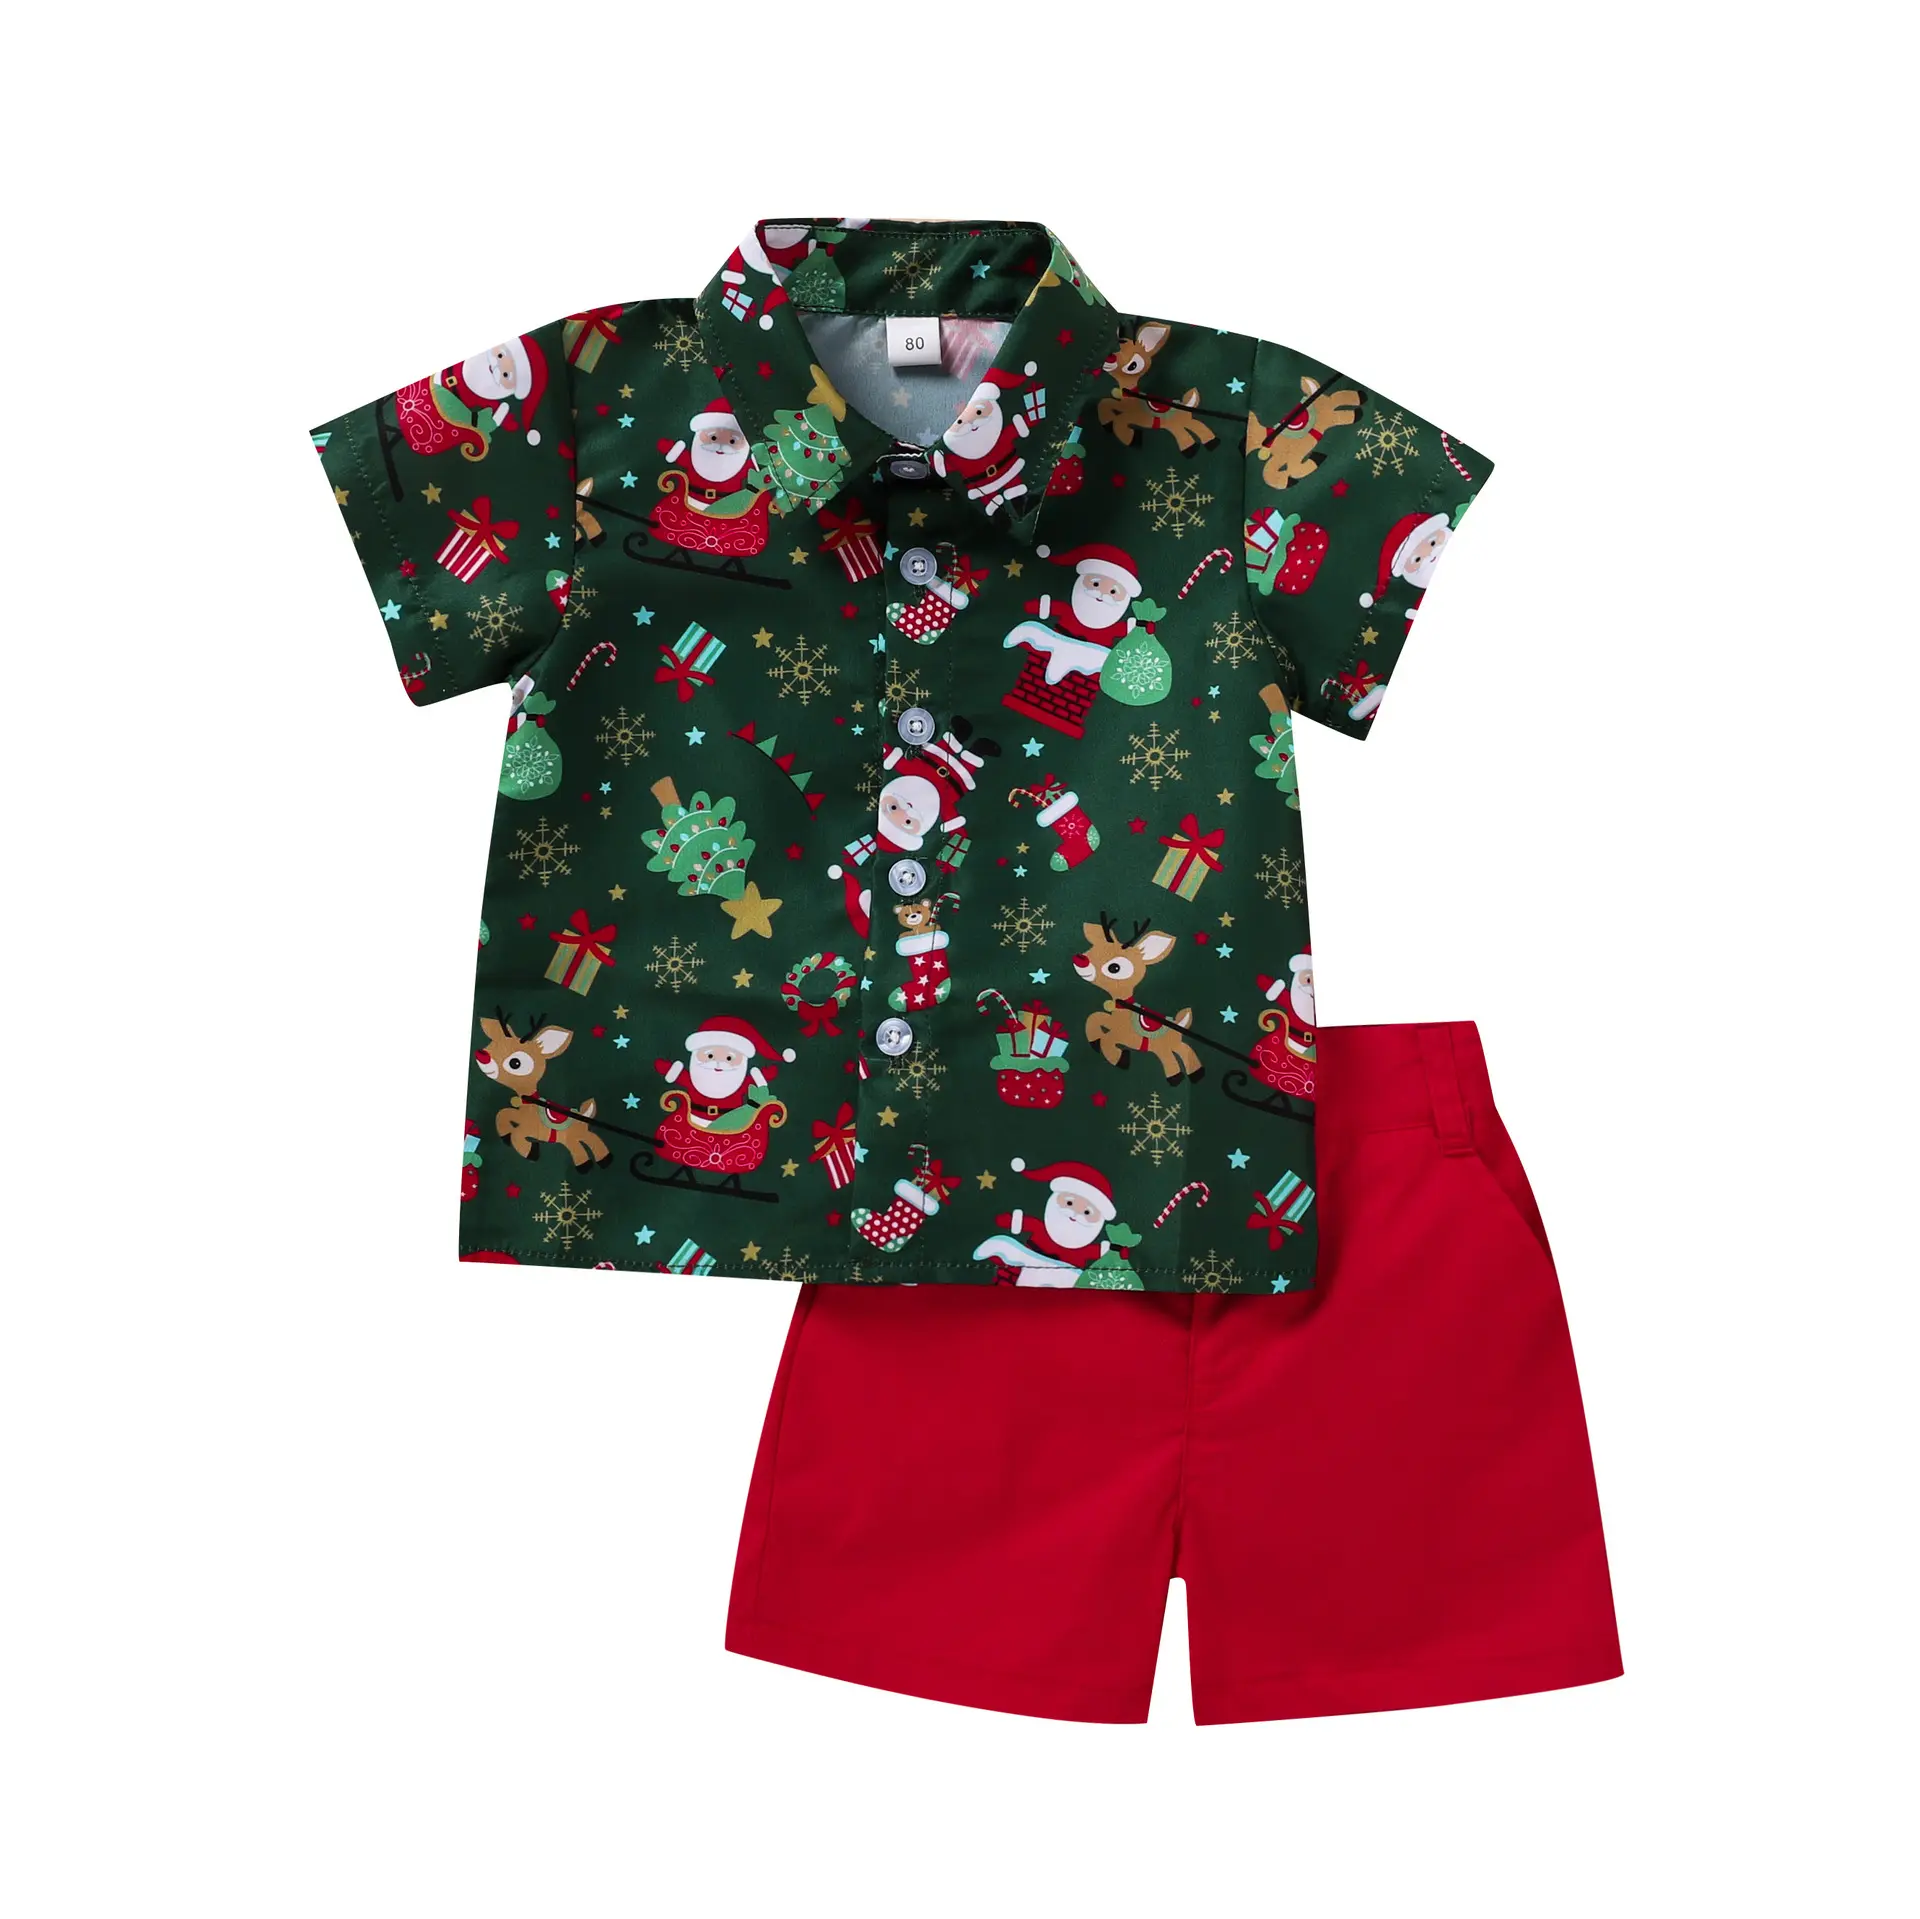 Children Summer Gentleman Outfits Kids Short Sleeve Shirt Shorts Boy Christmas Top & Pants 2pcs Clothing Baby Boys Clothes sets